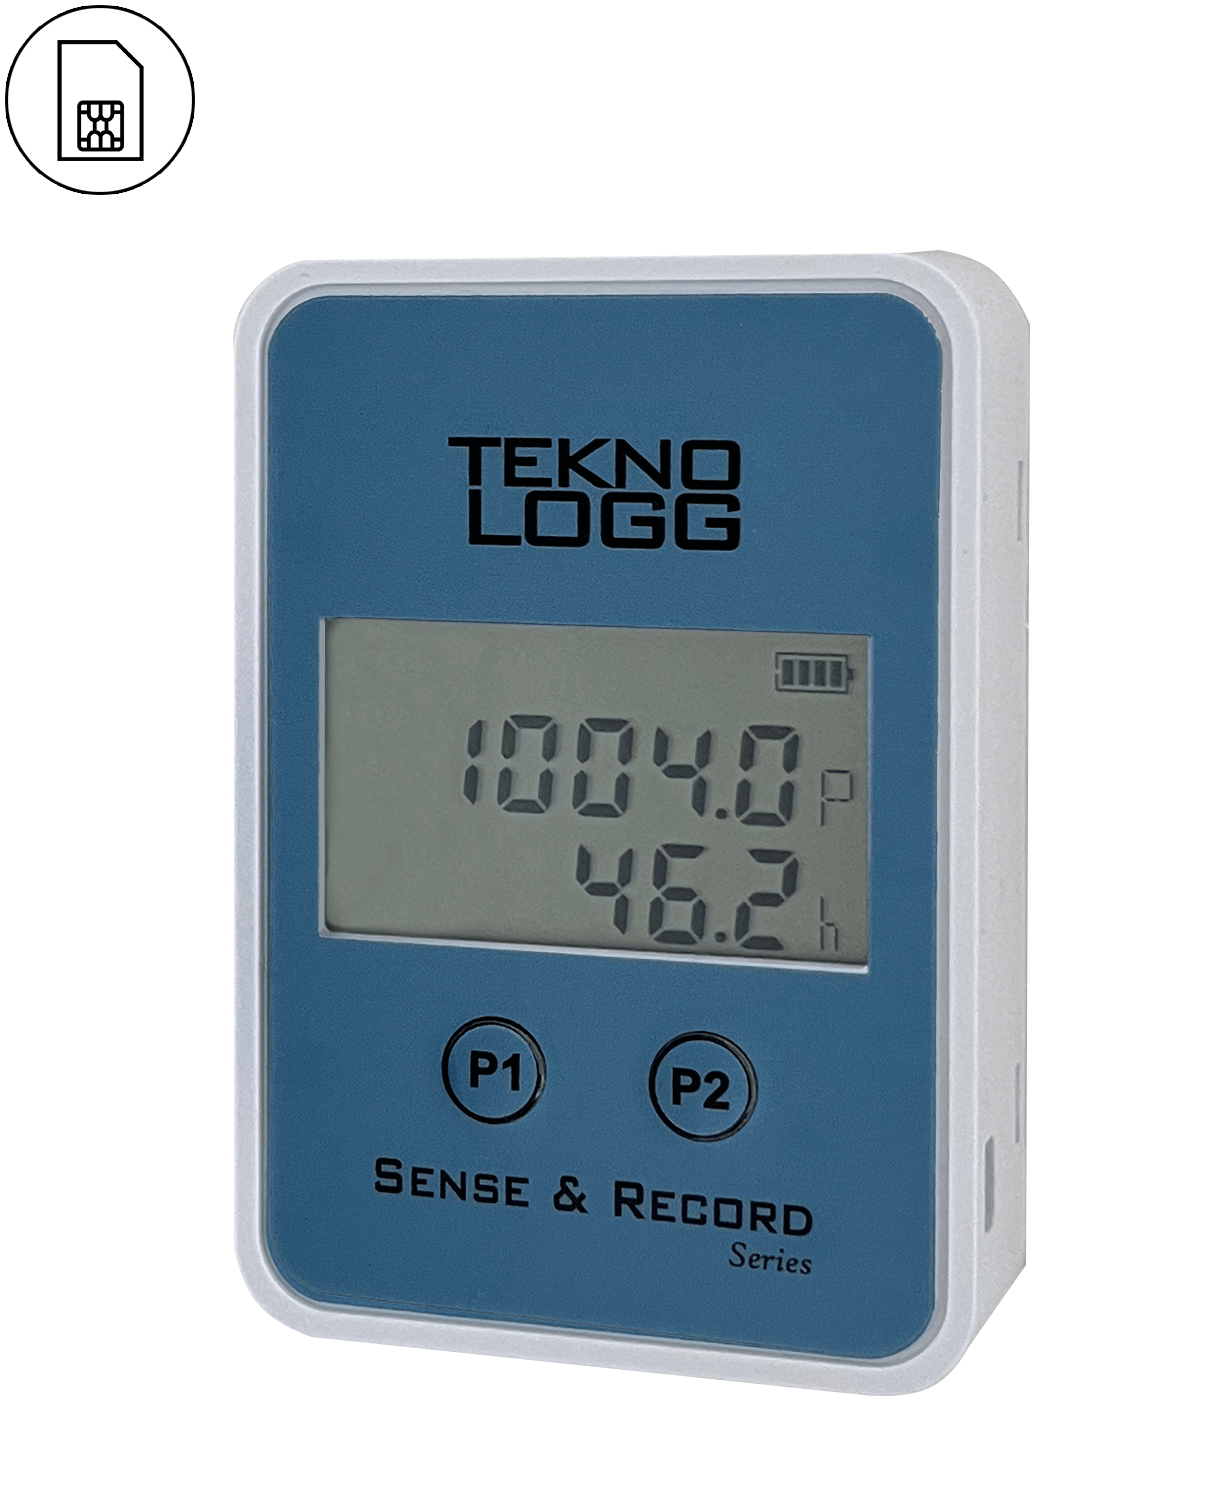 Teknologg TL-190GSM Data Logger